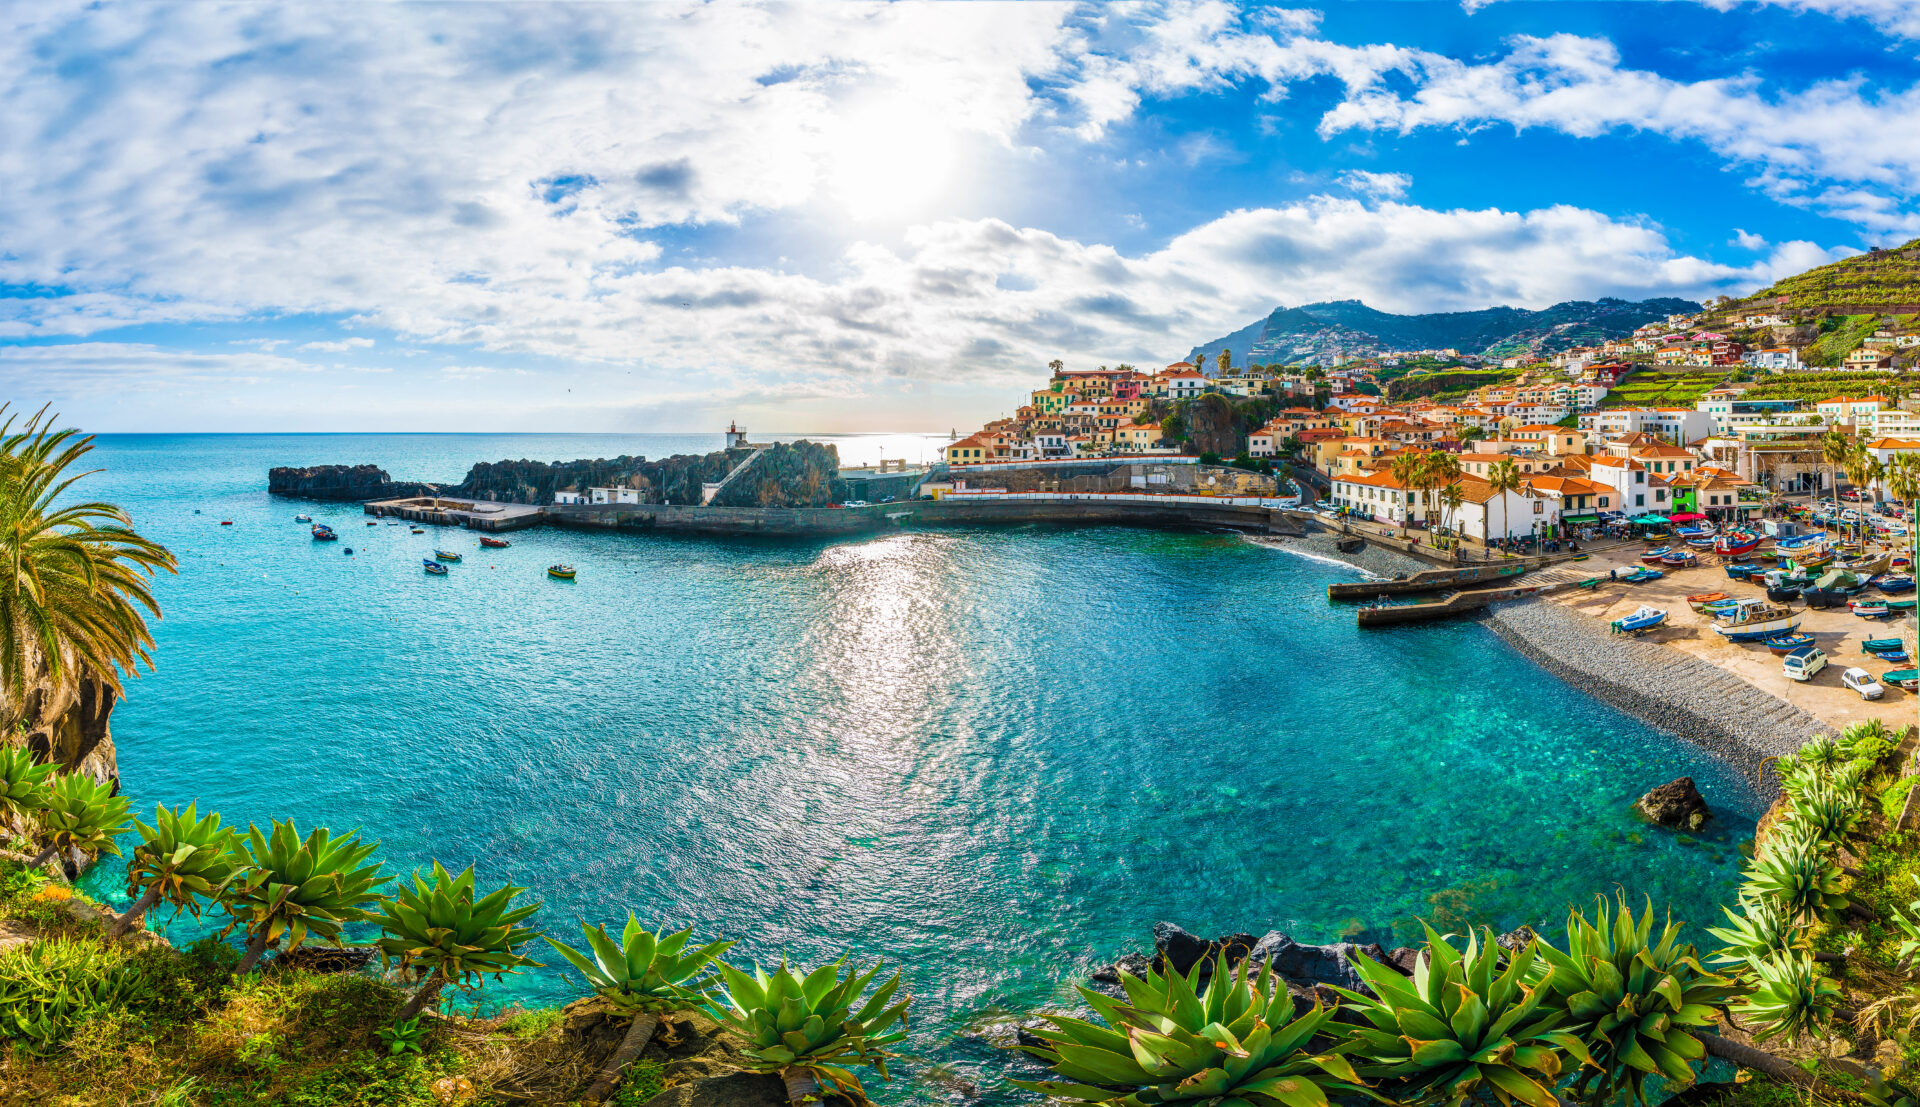 Câmara de Lobos auf Madeira - das malerische Fischerdorf